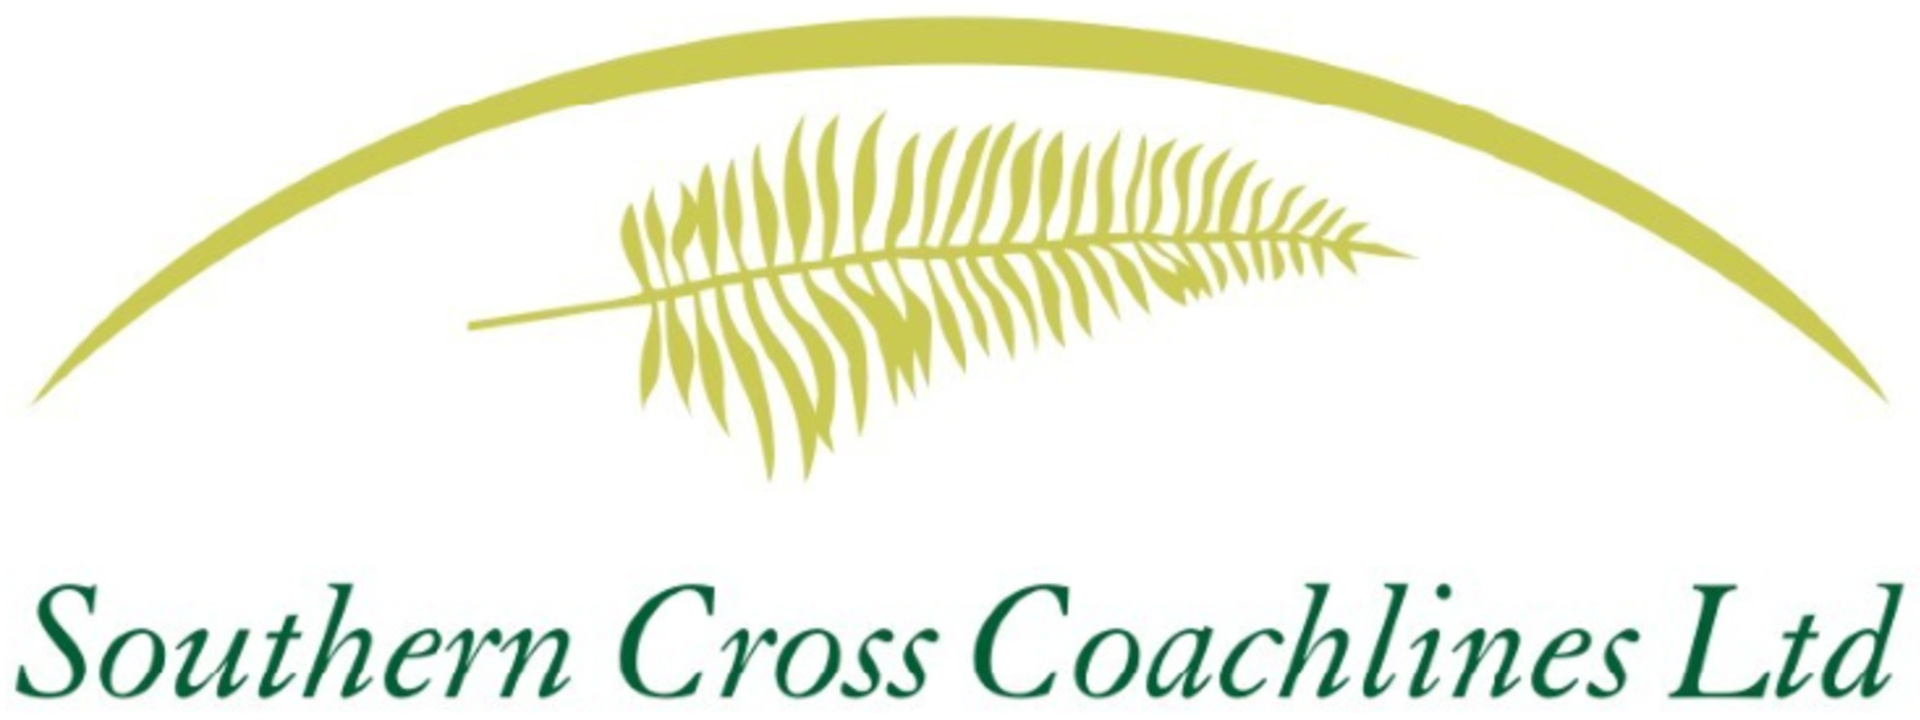 Logo: Southern Cross Coachlines Ltd